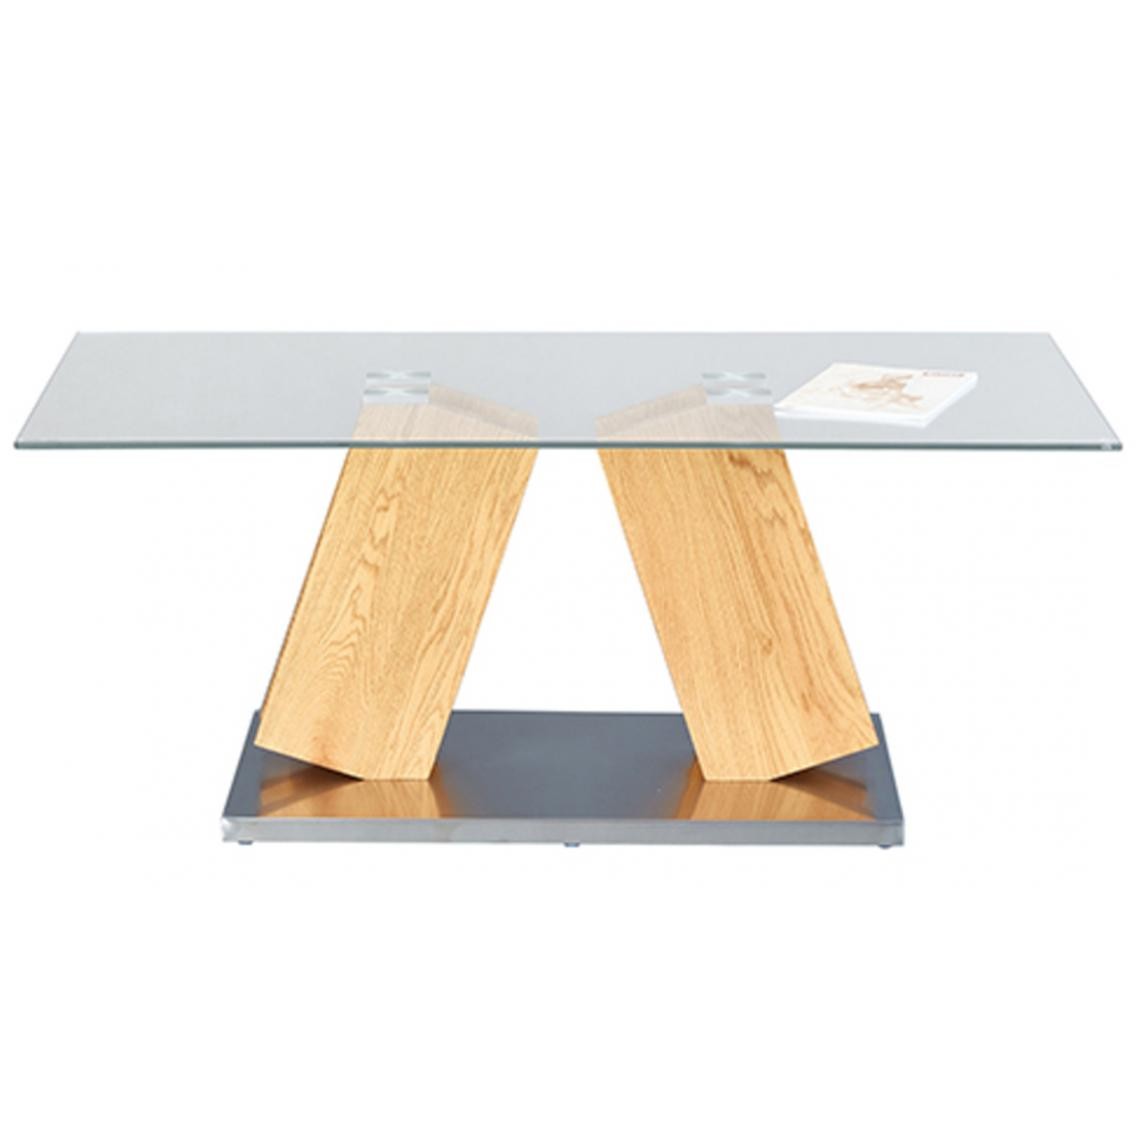 Pegane - Table basse rectangulaire chêne sauvage - Dim : L110 x H45 x P60 cm - Tables basses